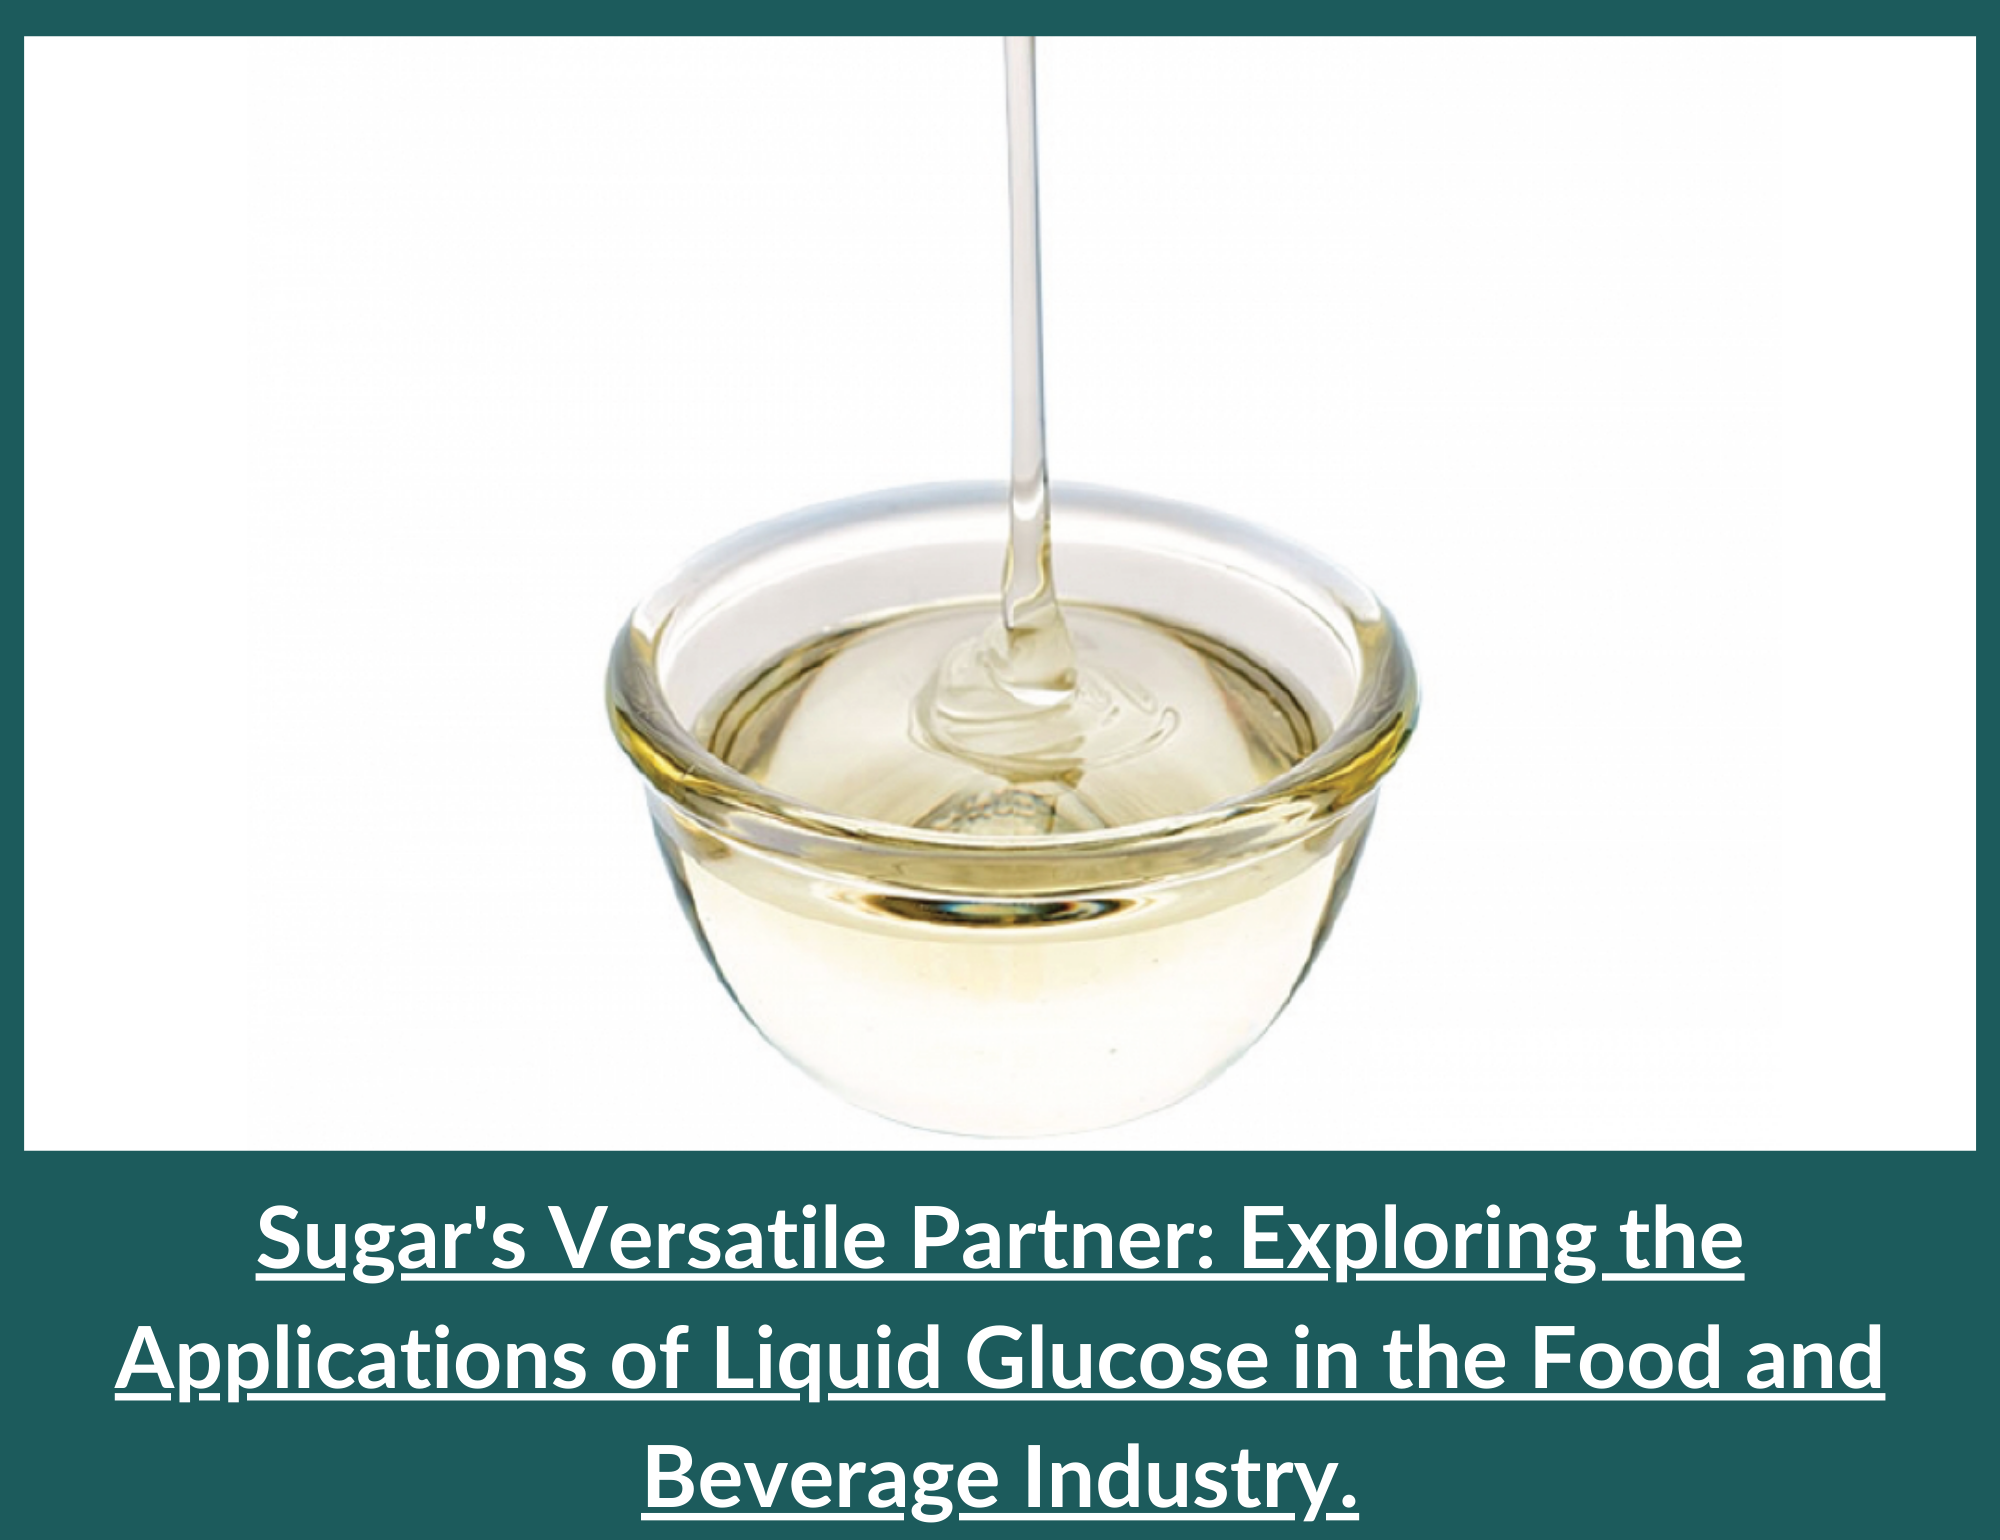 Applications of Liquid Glucose